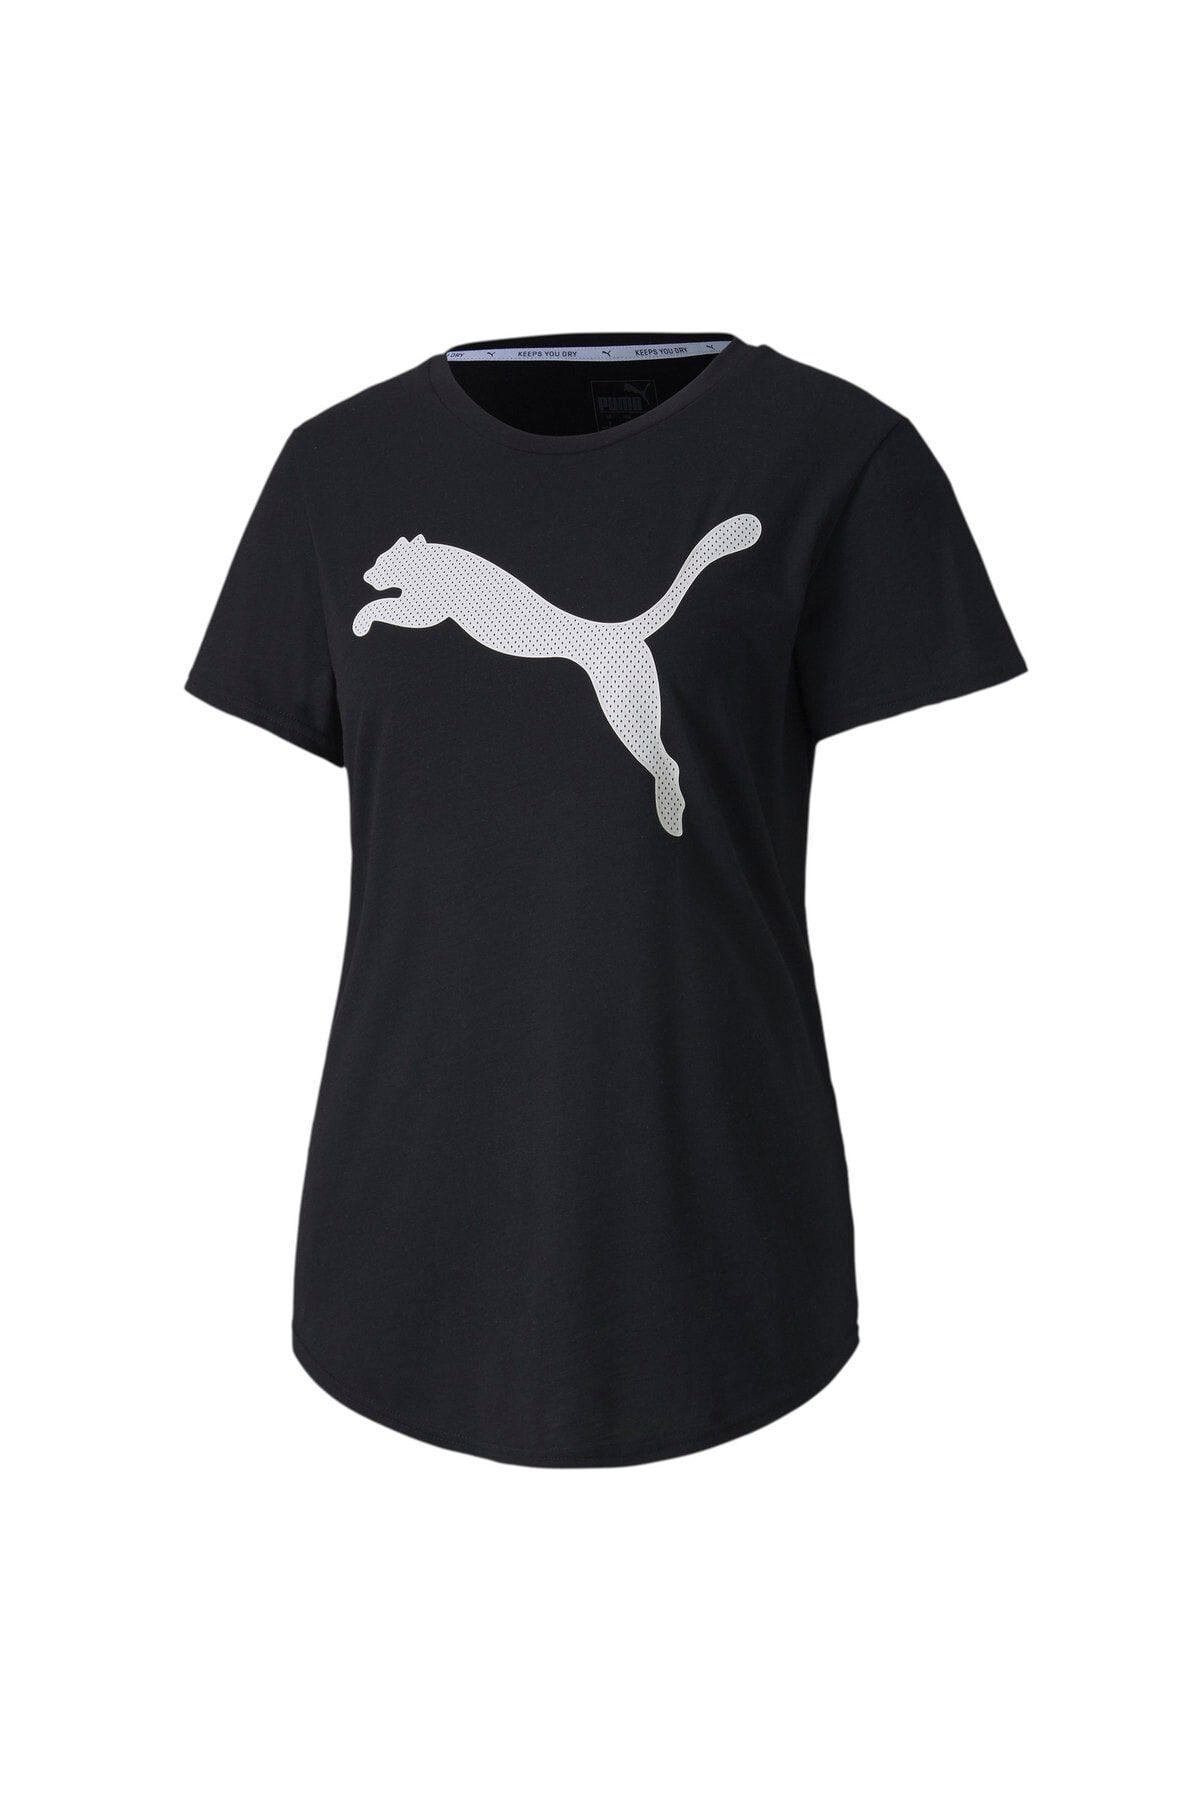 Puma EVOSTRIPE TEE Siyah Kadın T-Shirt 100547674